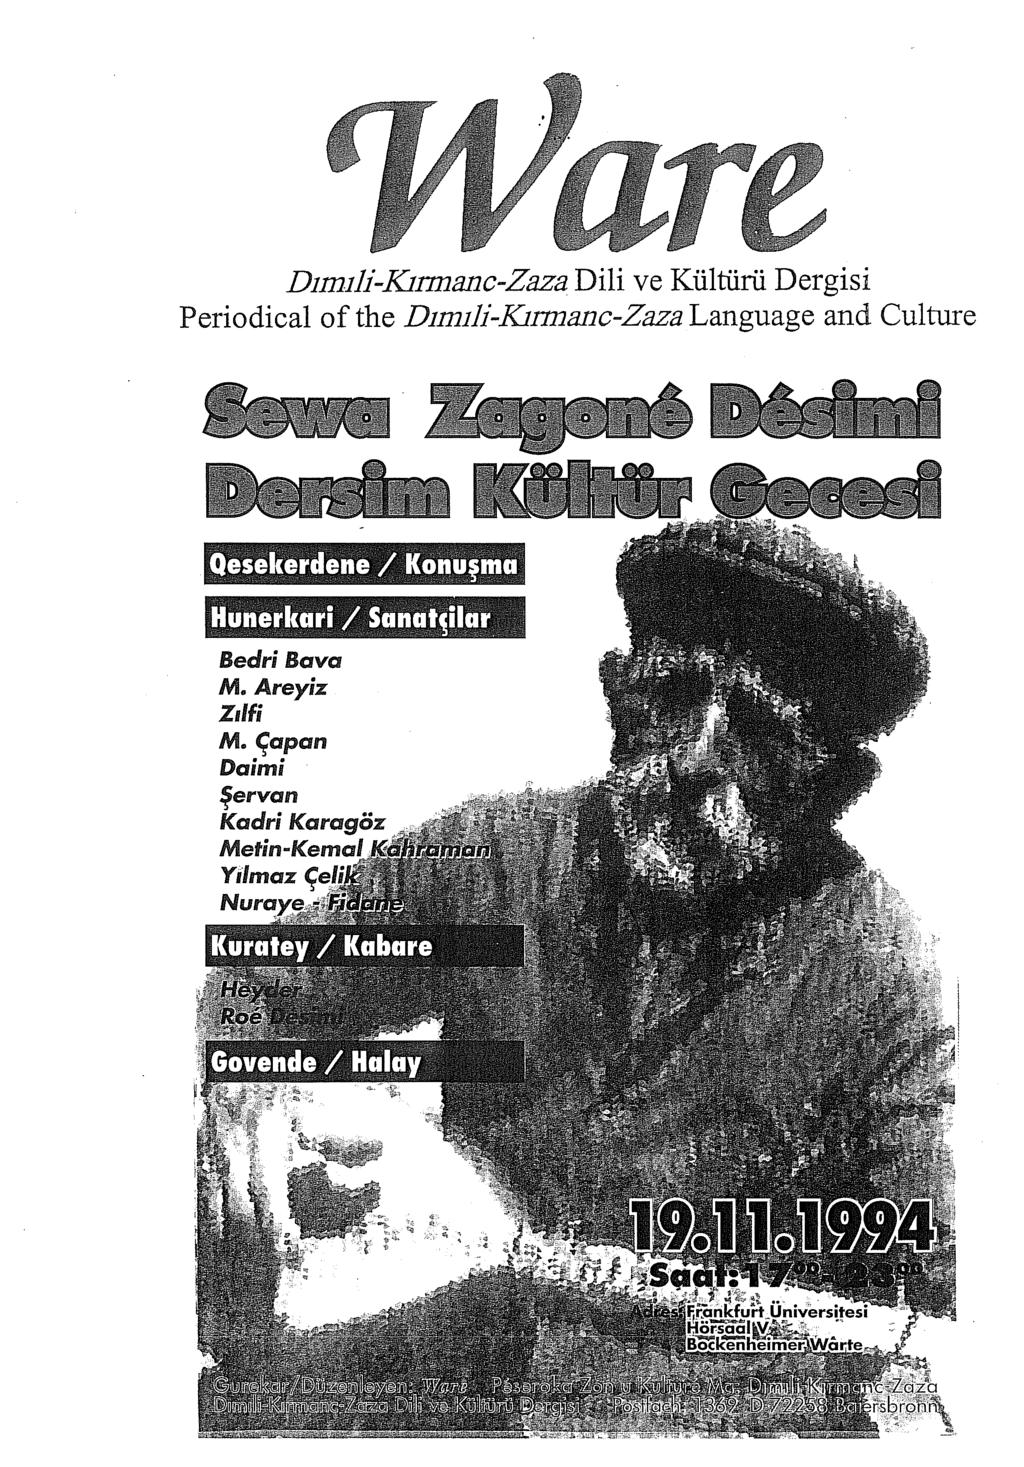 Dım1li-Kınnanc-Zaza Dili ve Kültürü Dergisi Periodical of the Dımıli-Kınnanc-Zaza Language